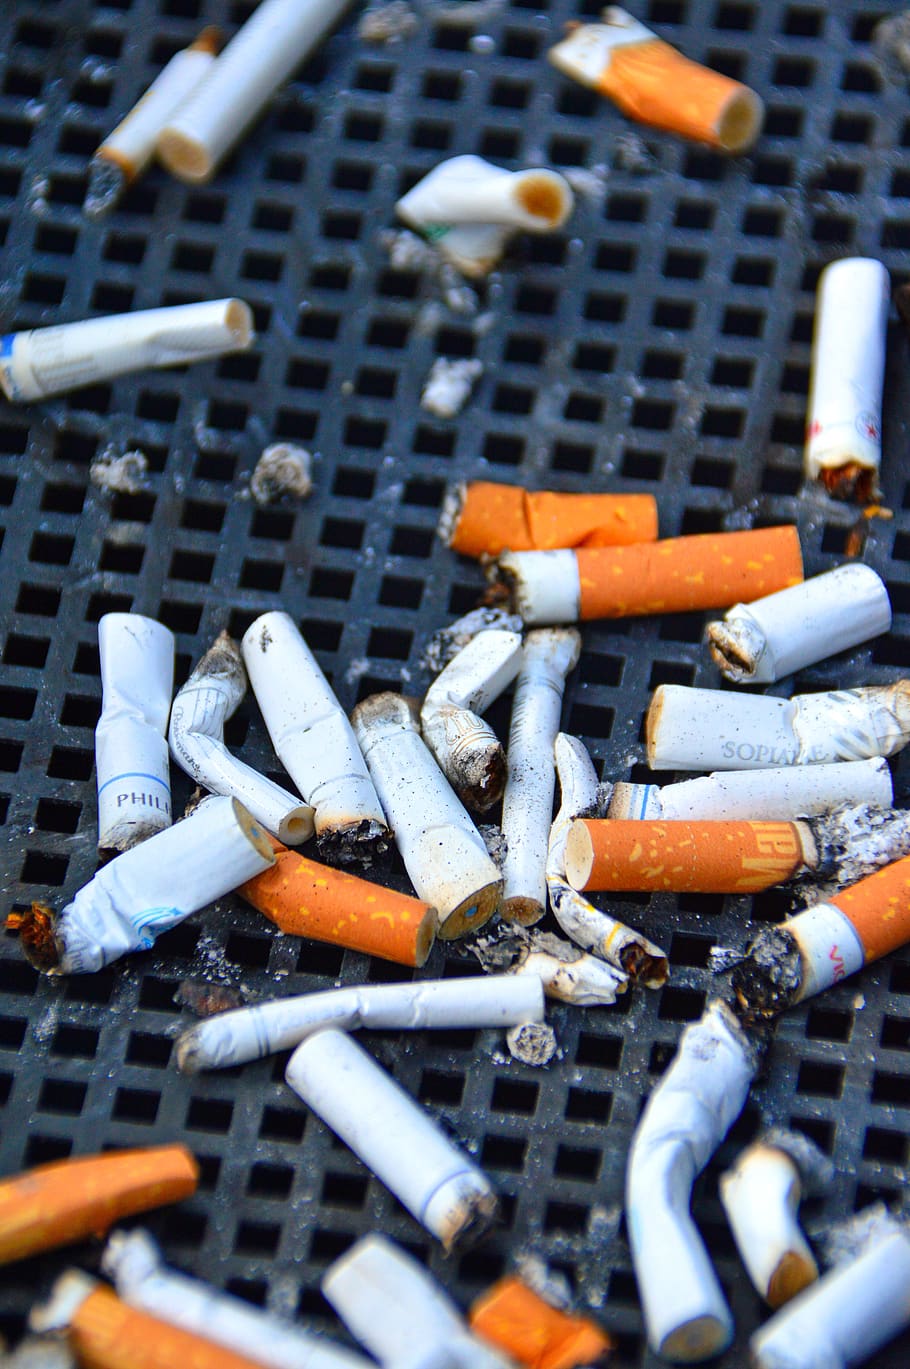 cig, cigarette, chic, butts, nicotine, smoking, health, lifestyle, tobacco, habit